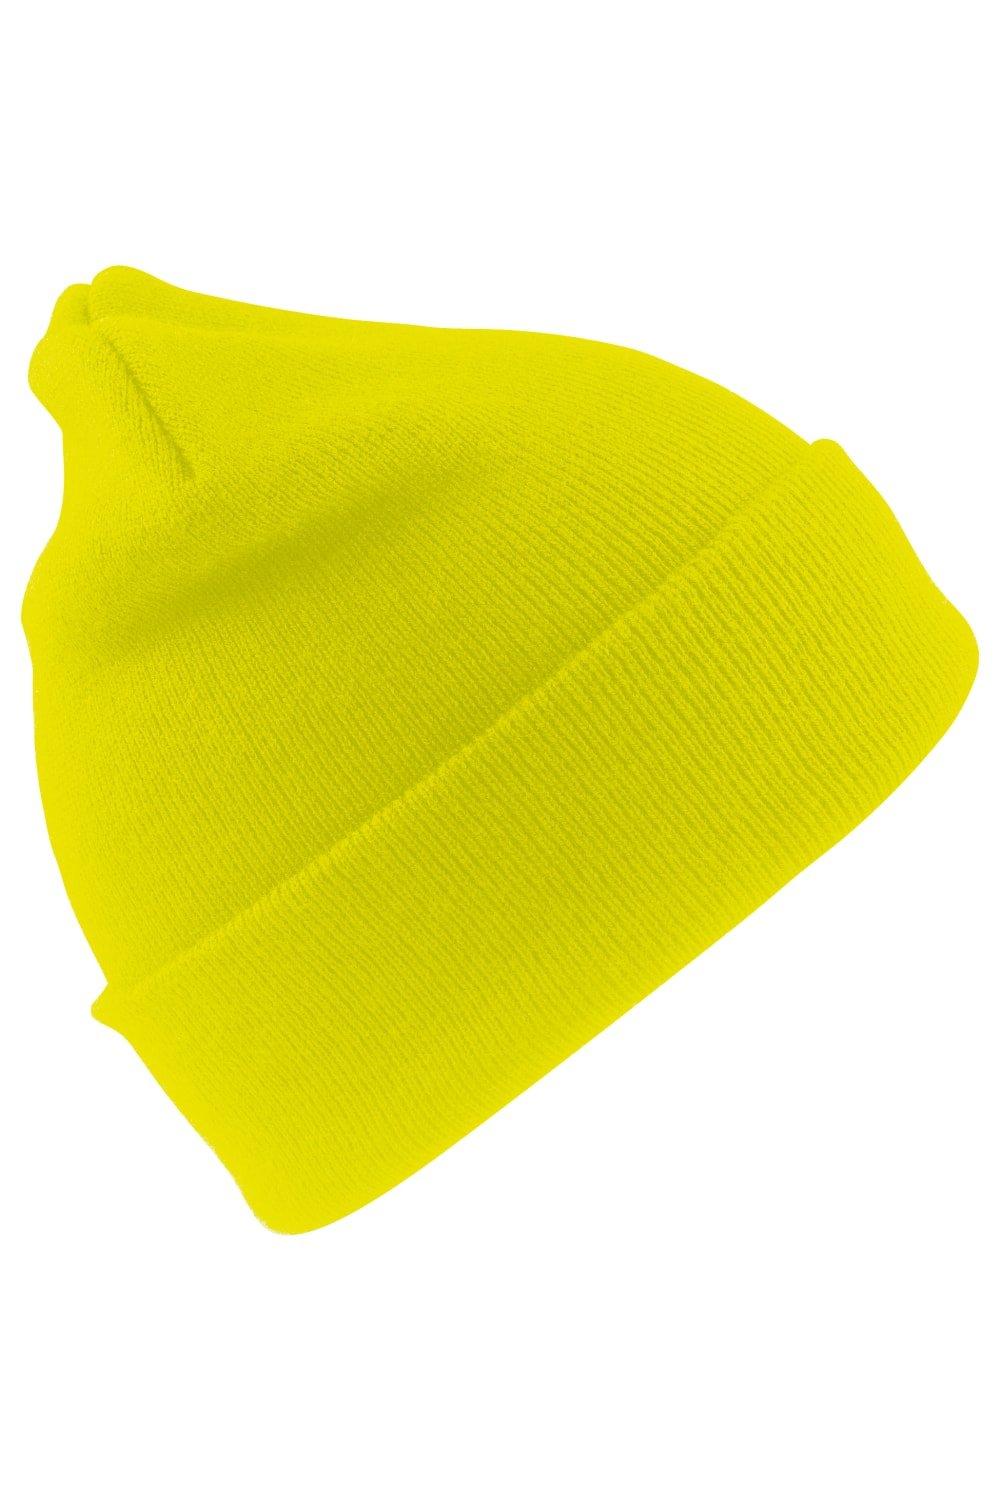 Шерстяная термолыжная/зимняя шапка с утеплителем Thinsulate 3M Result, желтый пряжа семеновская пряжа kable 30005 перванш 5 шт по 100 г